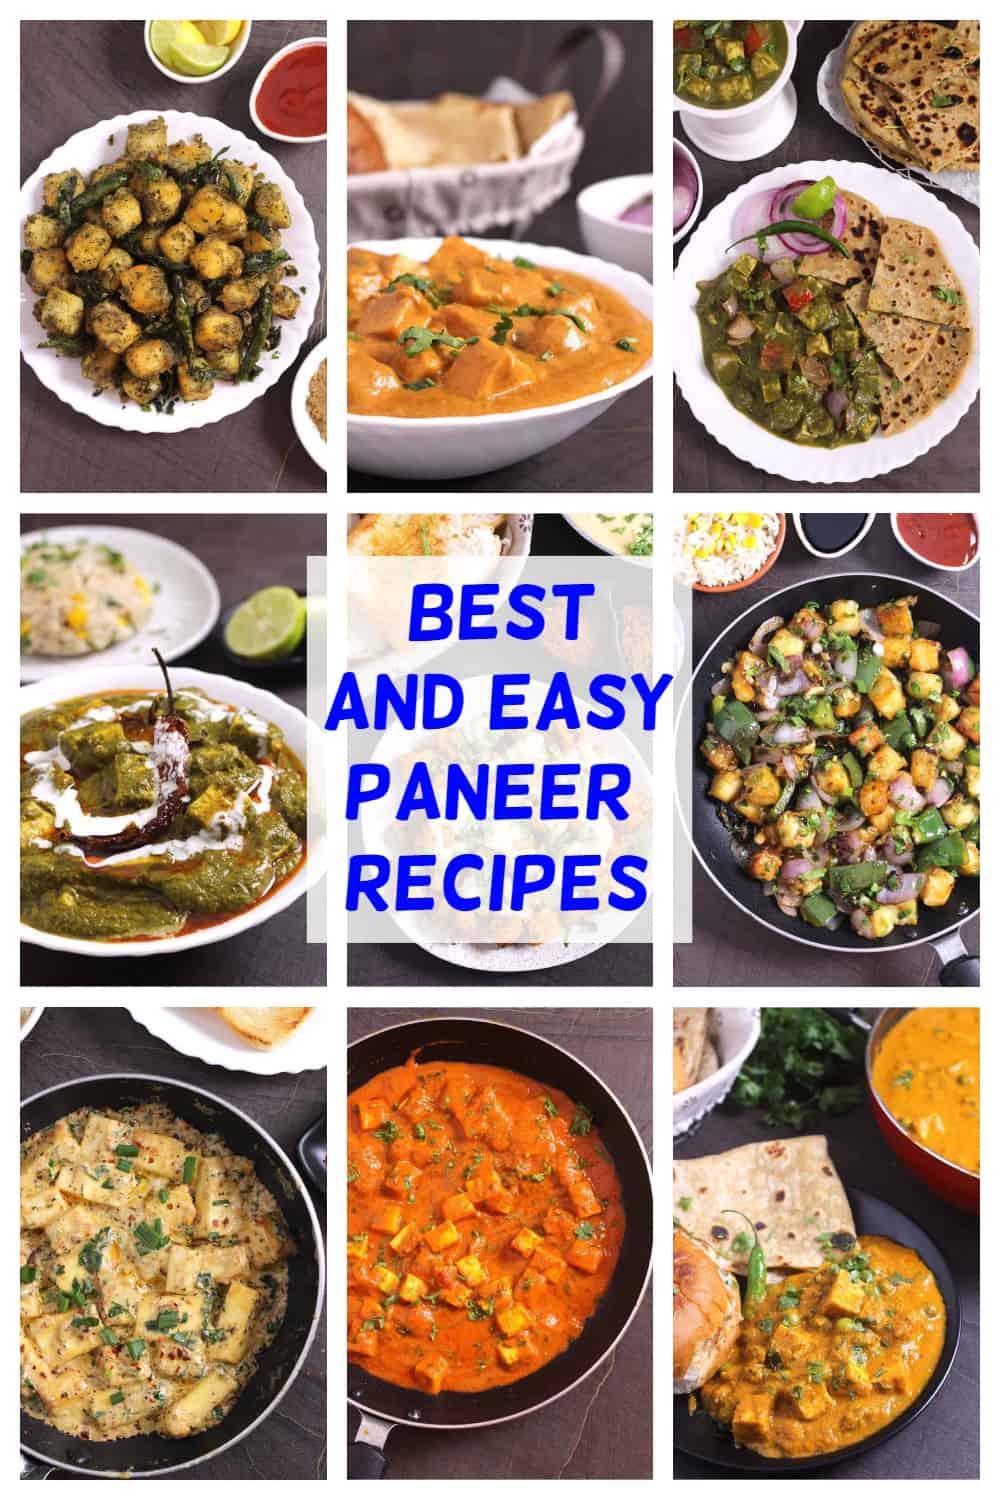 best, simple, easy paneer recipes for breakfast, lunch, dinner, snacks - butter masala, matar paneer